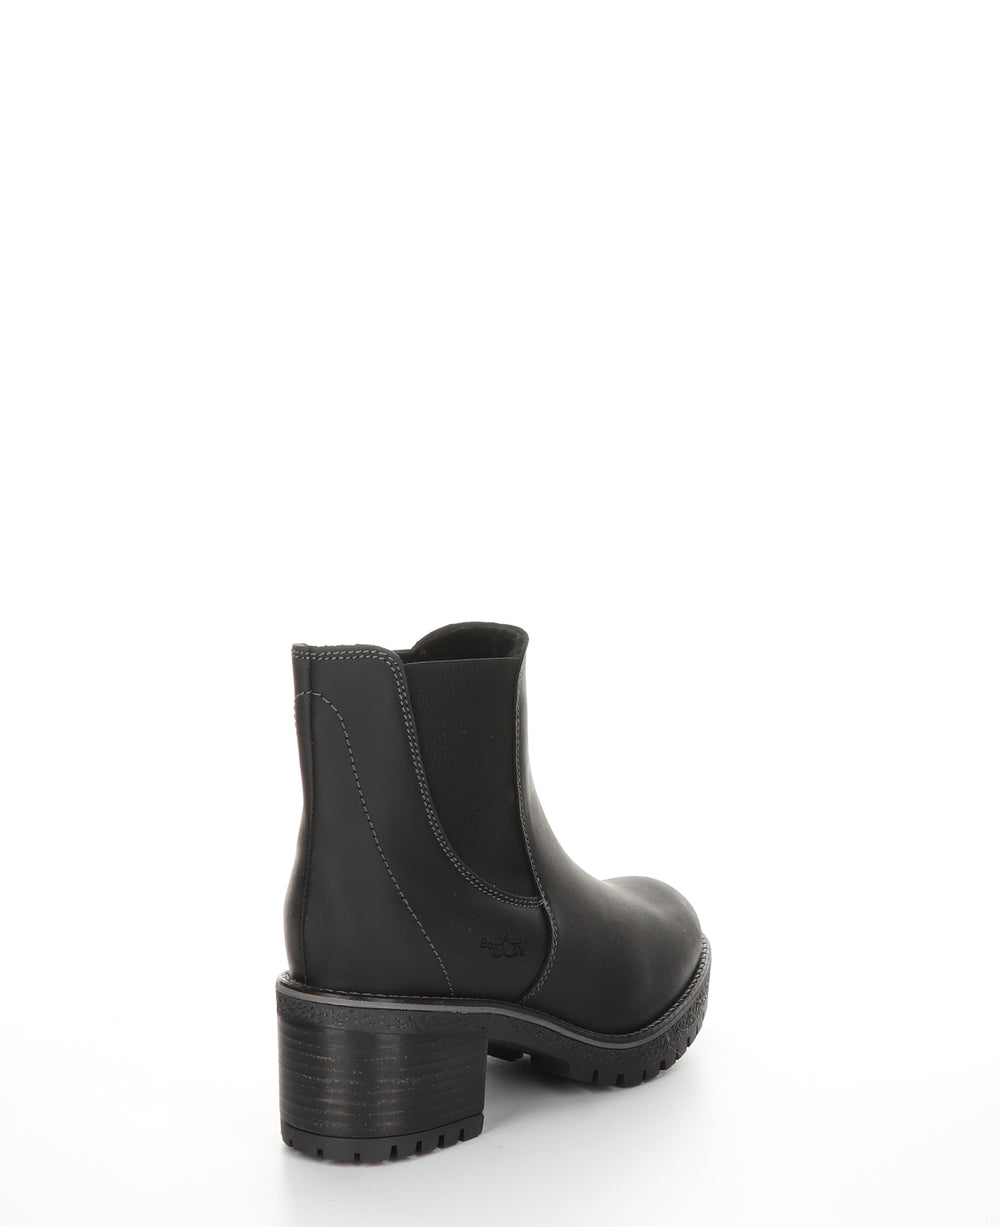 MASS Black Zip Up Ankle Boots|MASS Bottines avec Fermeture Zippée in Noir